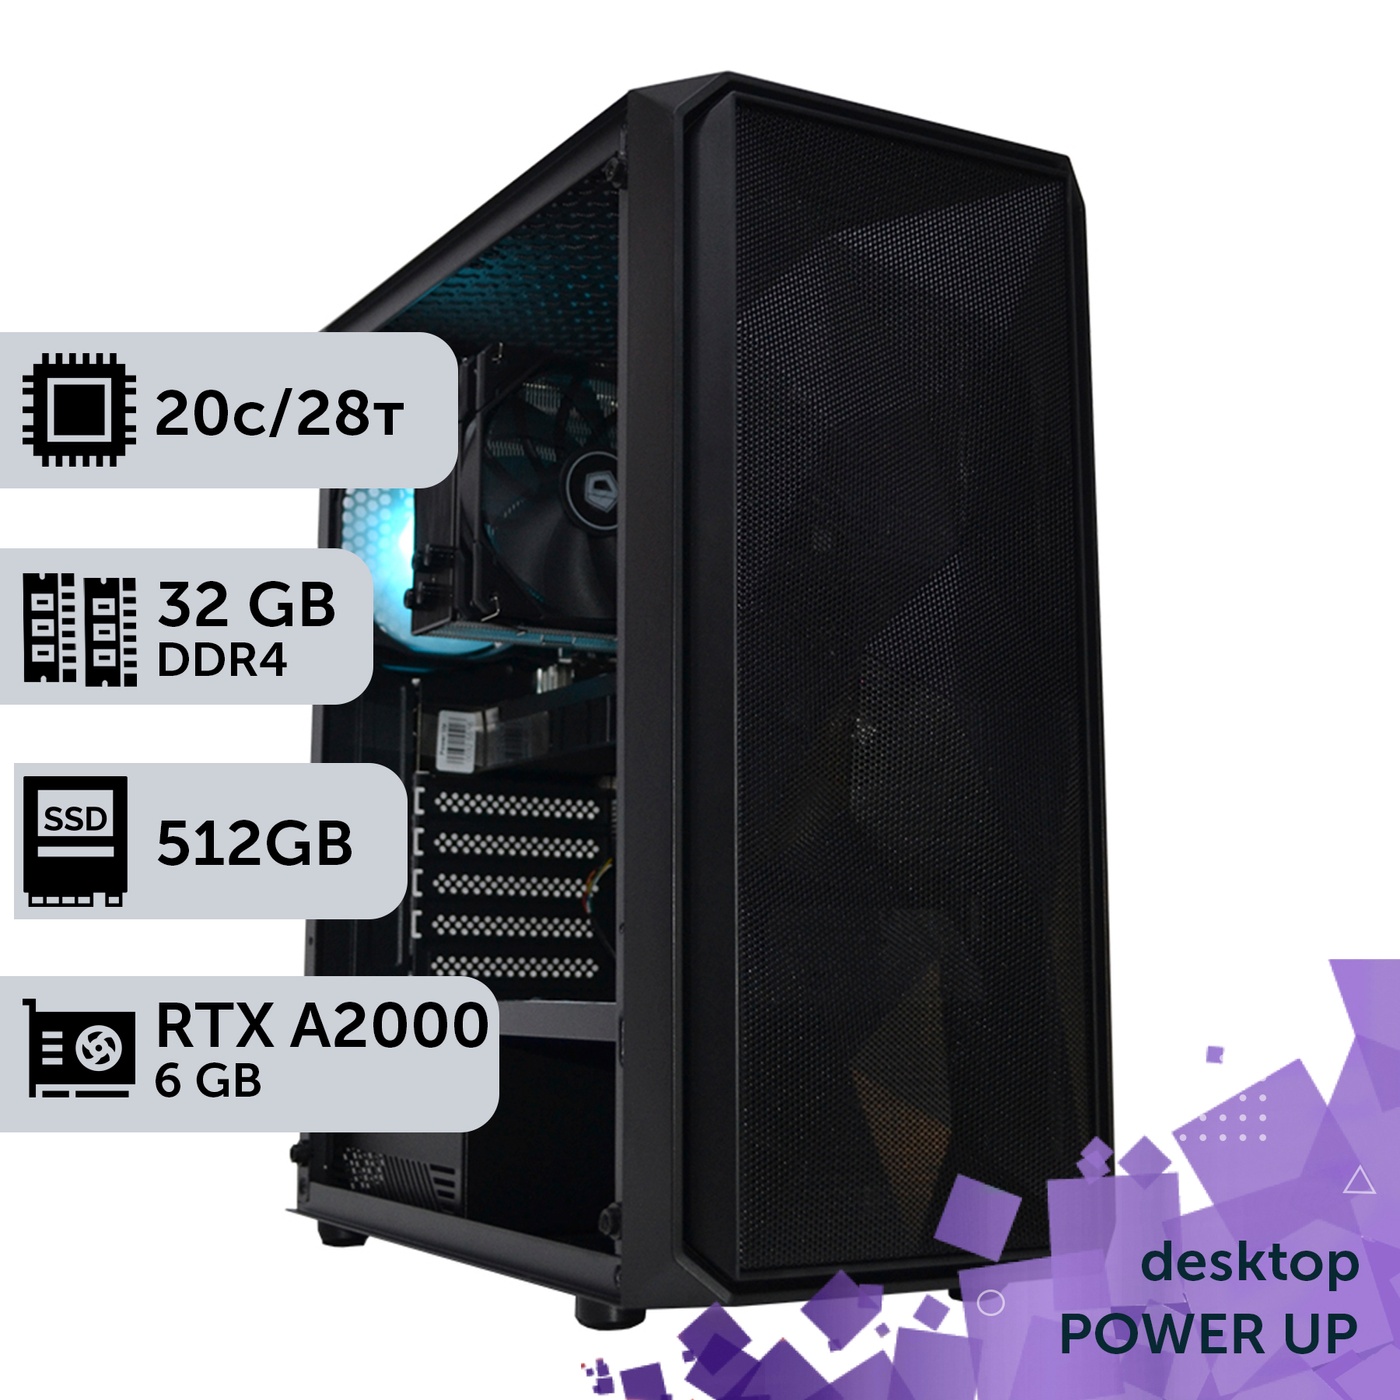 Робоча станція PowerUp Desktop #311 Core i7 14700K/32 GB/SSD 512GB/NVIDIA Quadro RTX A2000 6GB